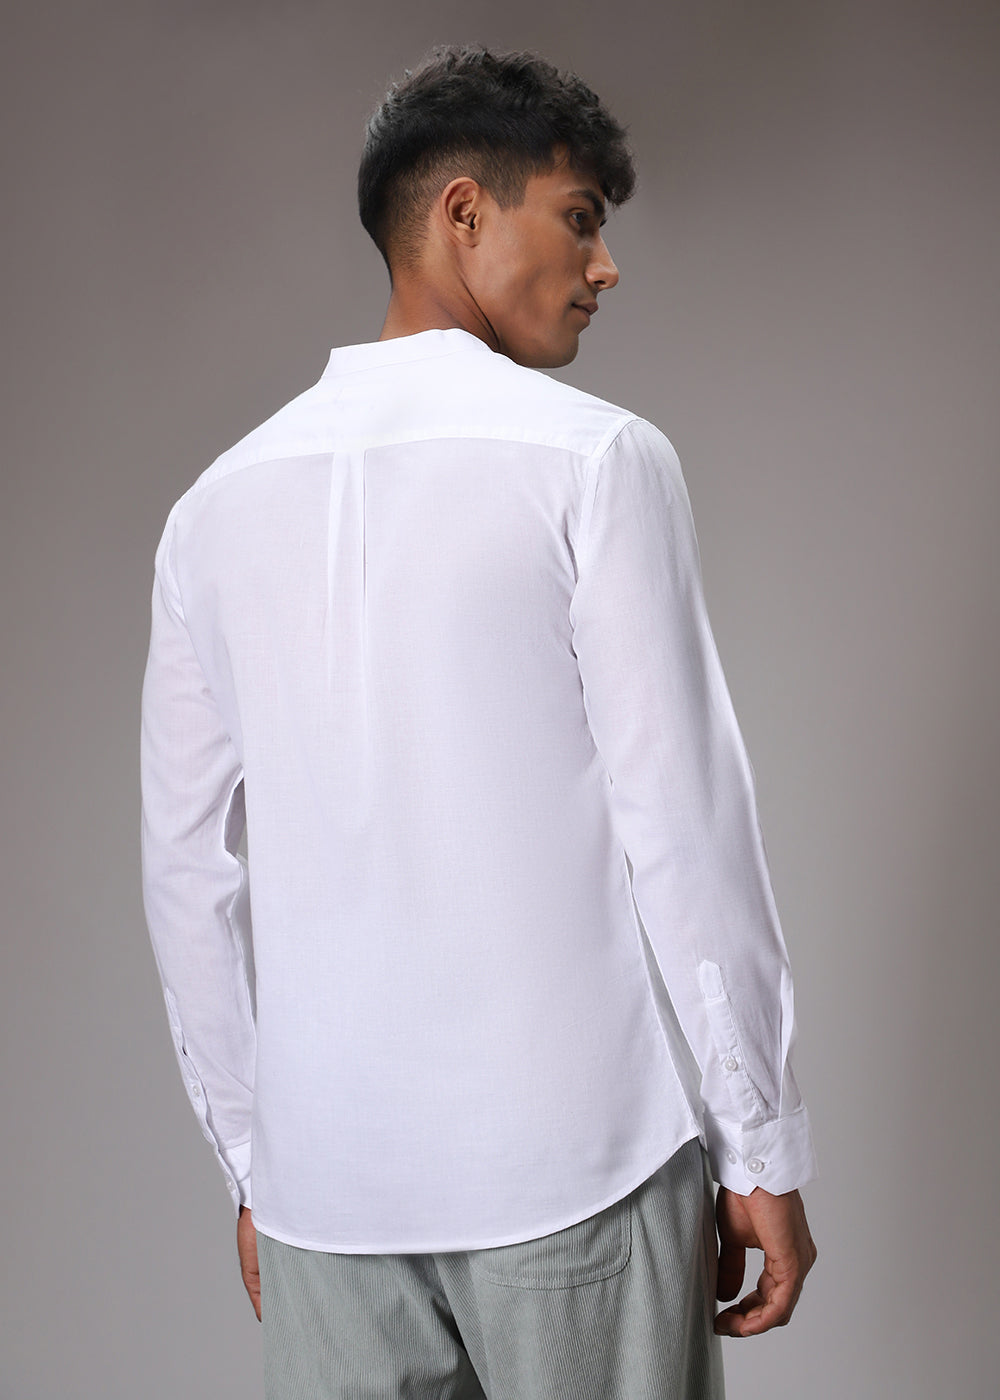 Glaze White Cotton Shirt